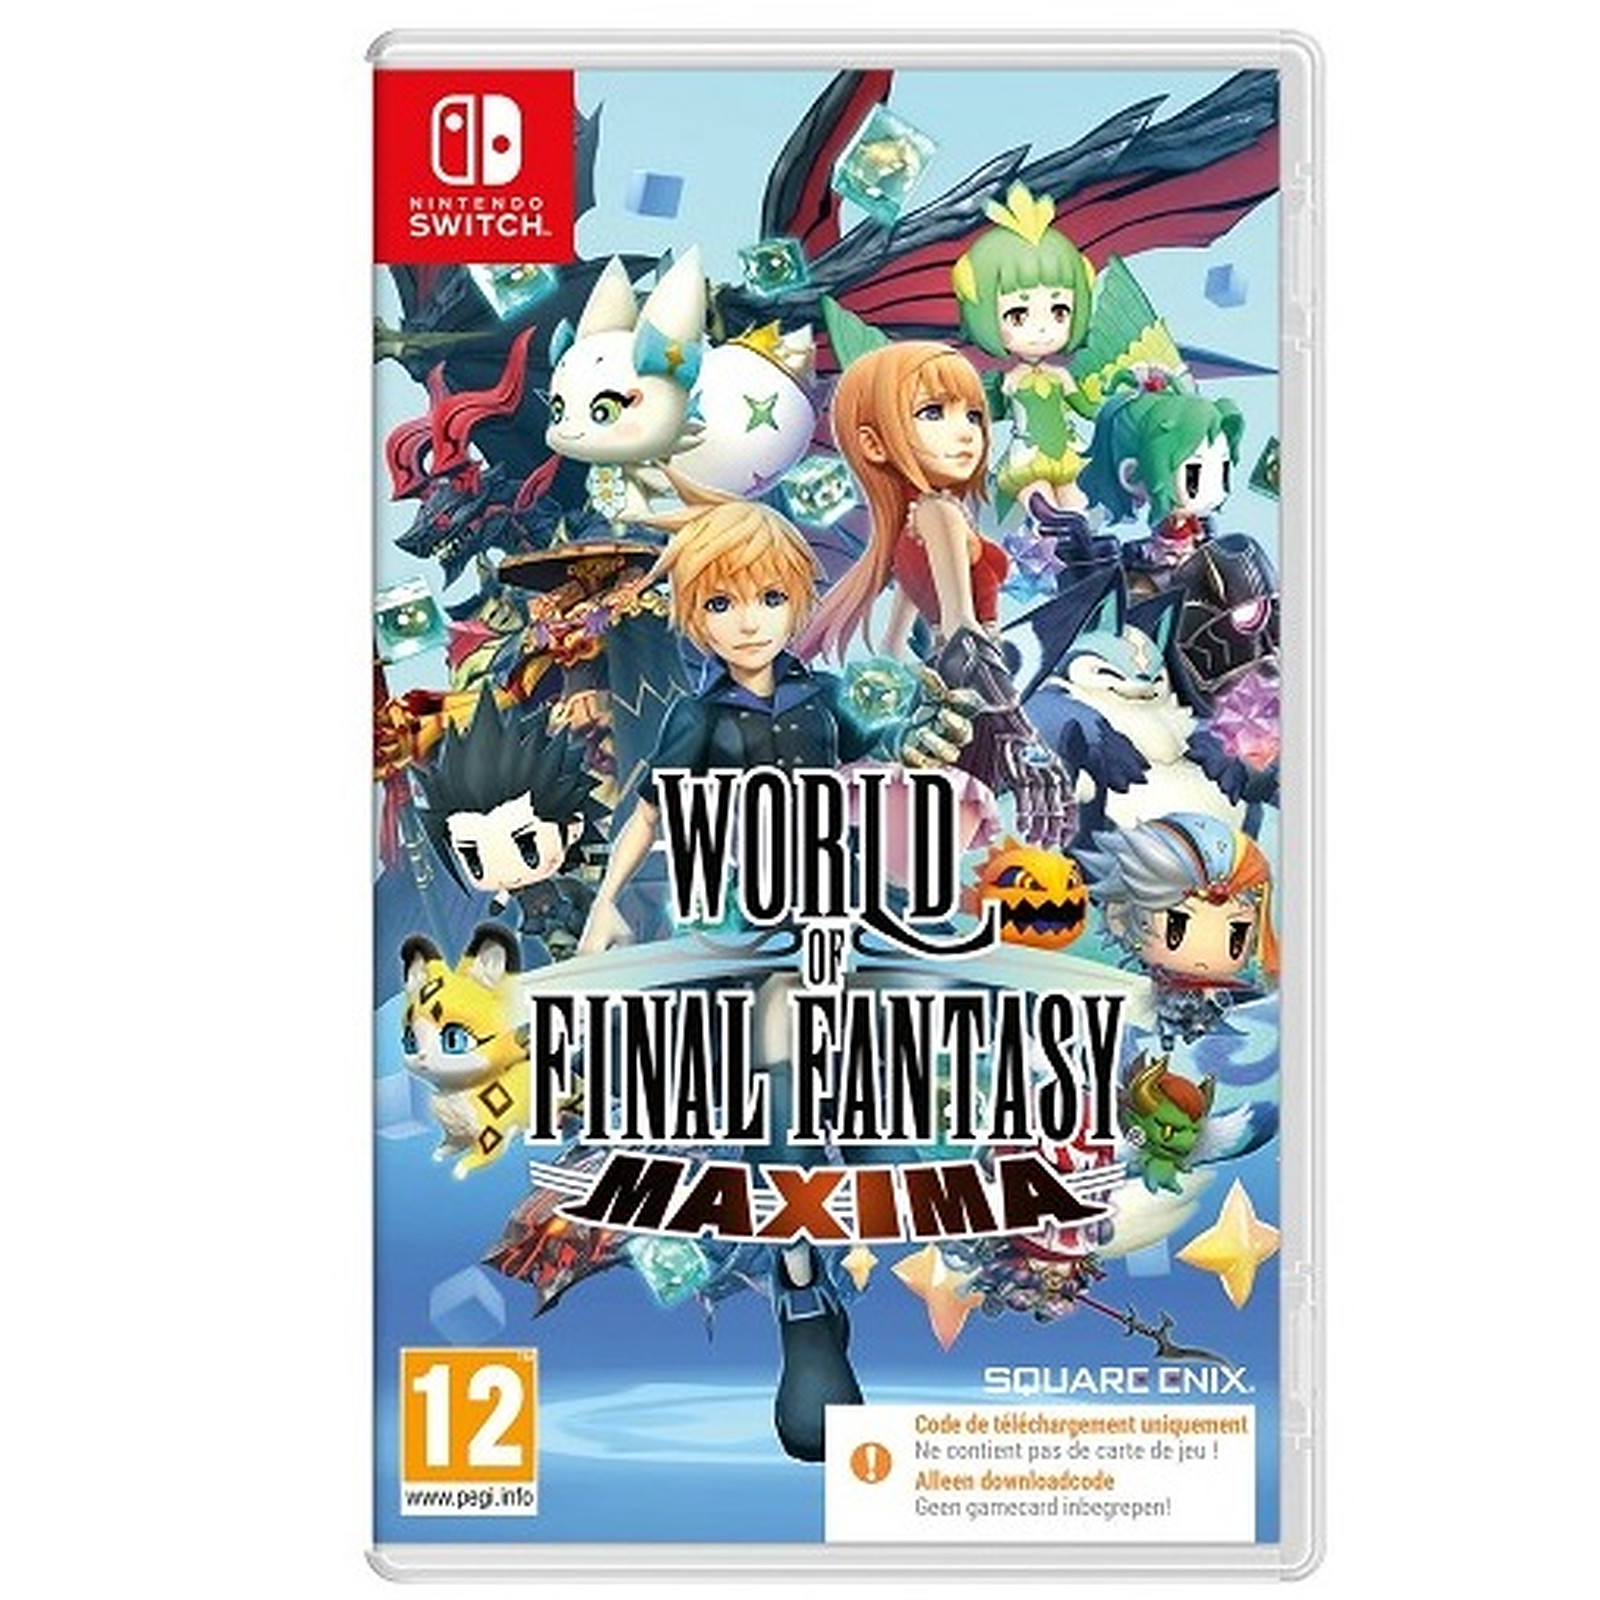 World of Final Fantasy Maxima (SWITCH) - Jeux Nintendo Switch Square Enix